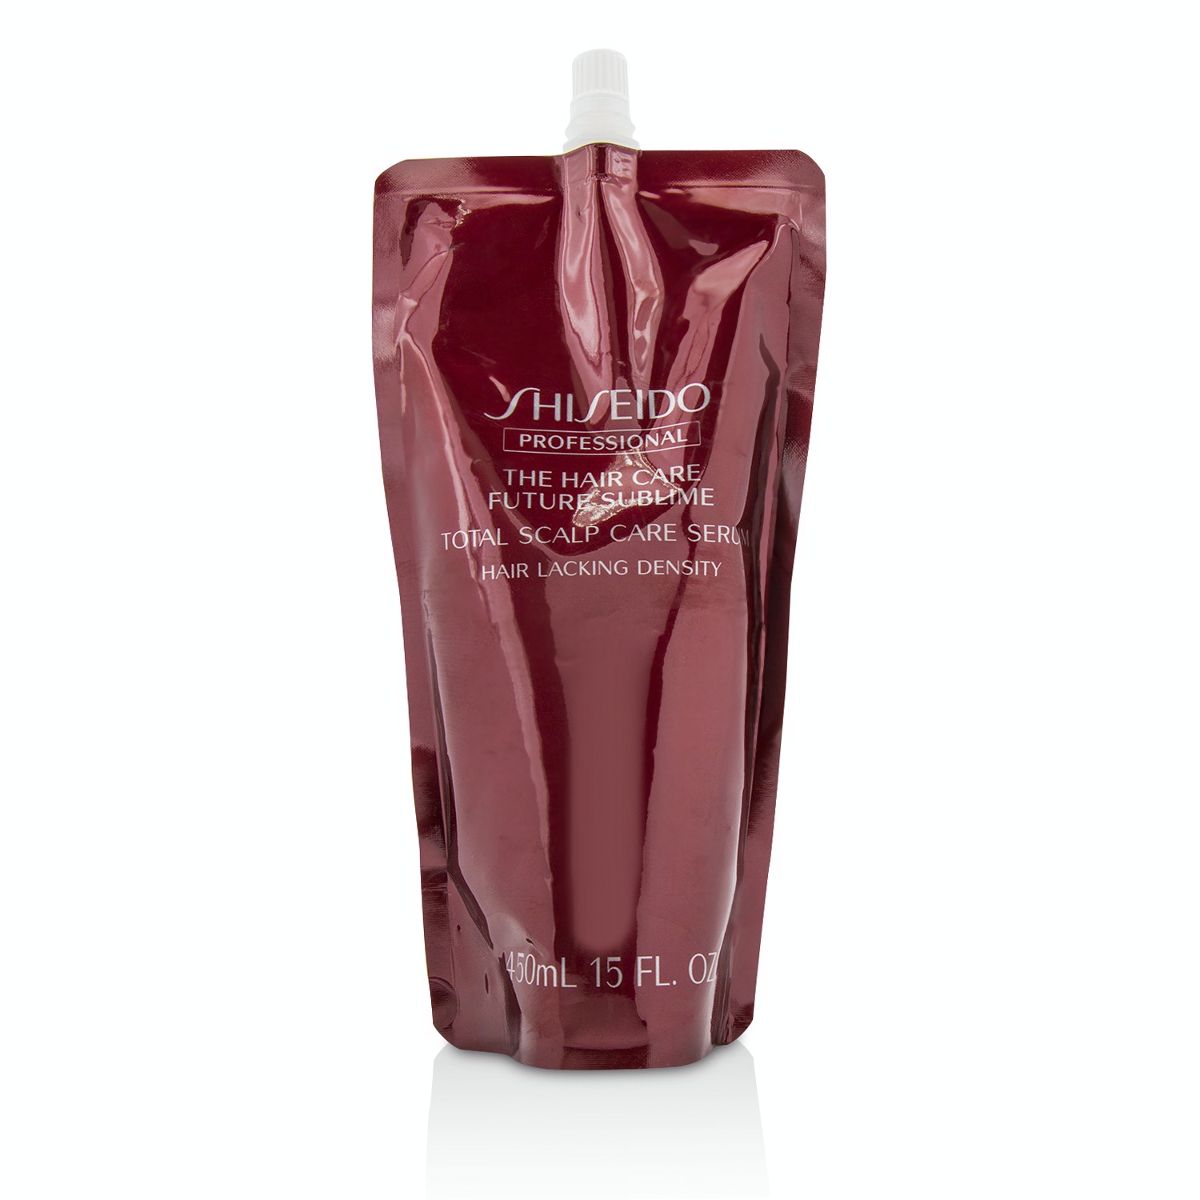 The Hair Care Future Sublime Total Scalp Care Serum - Refill (Hair Lacking Density) Shiseido Image